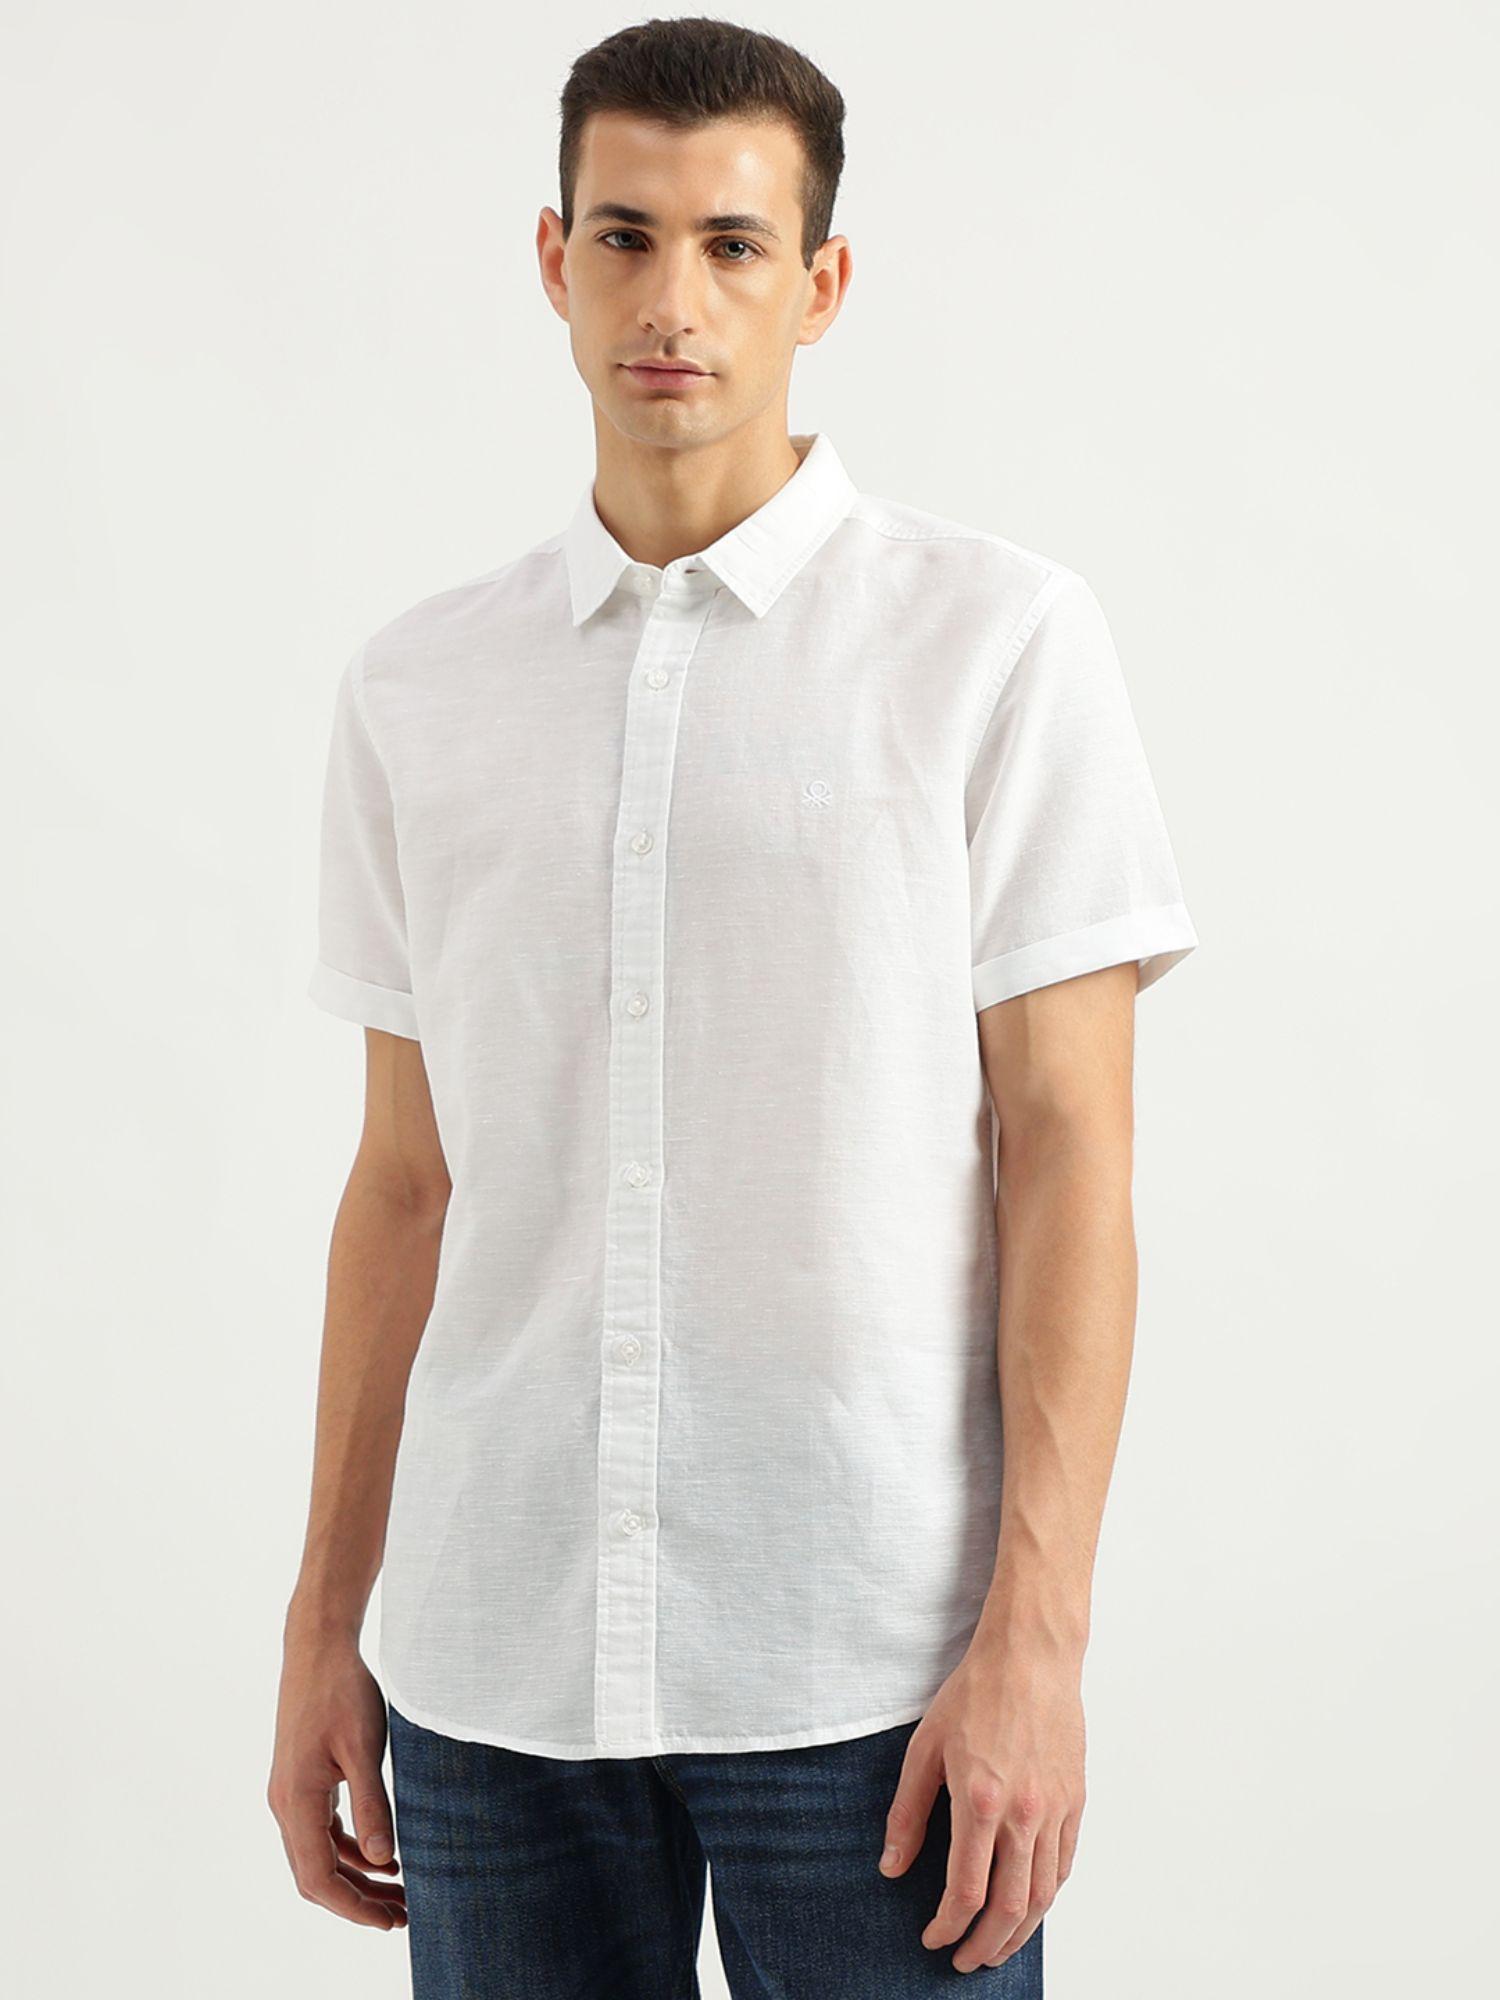 men's-slim-fit-spread-collar-solid-shirt